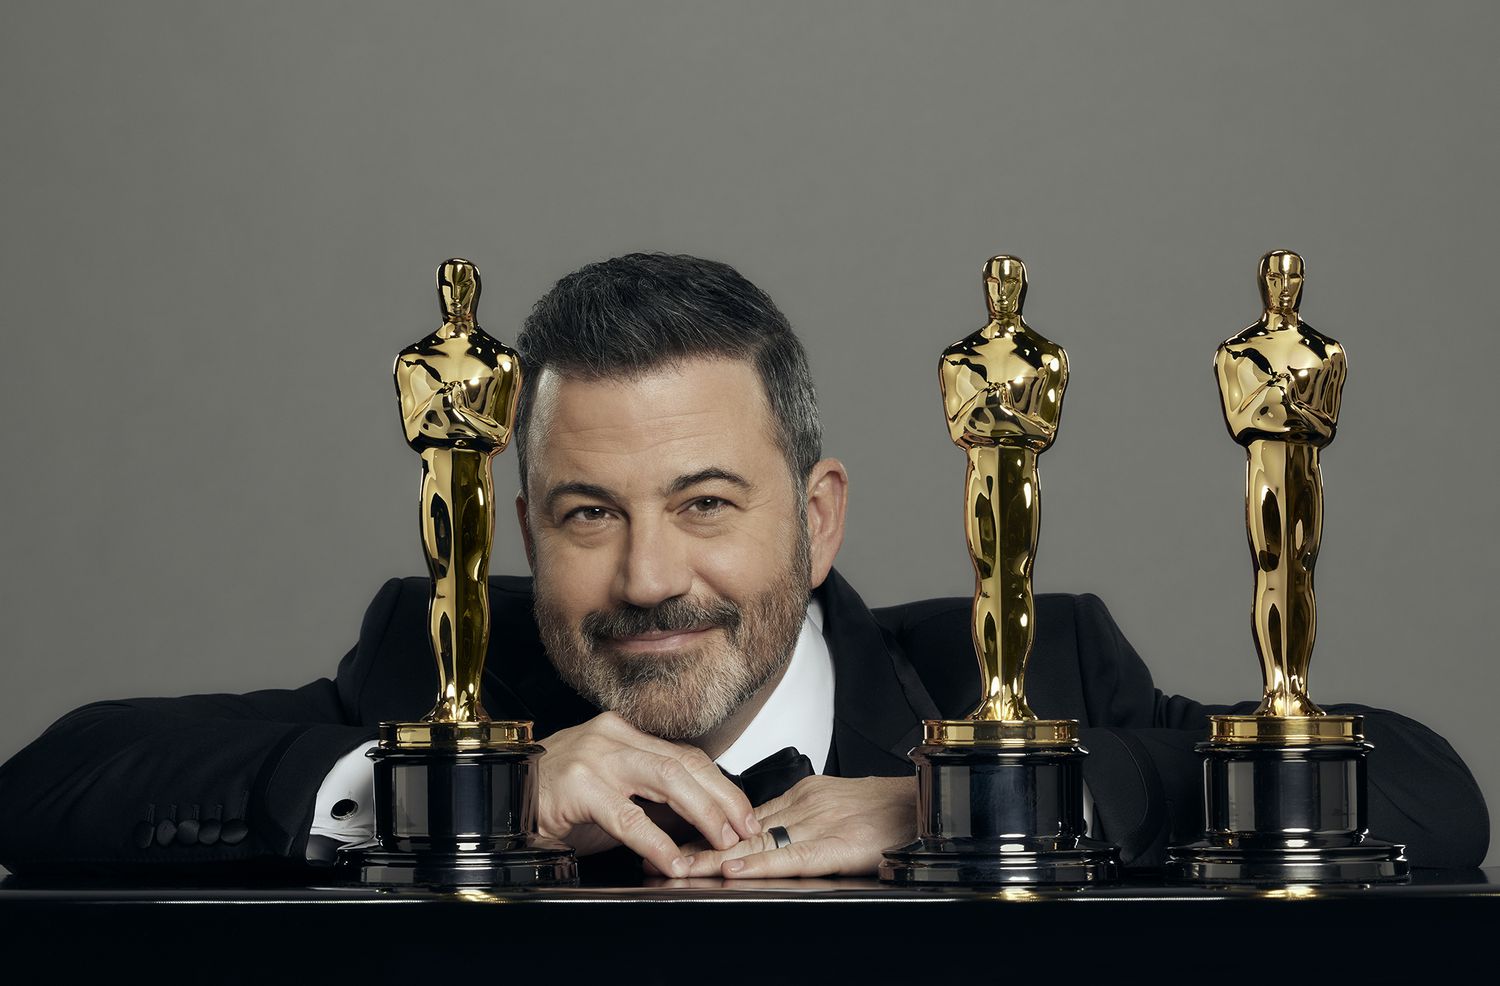 Jimmy Kimmel wearing a black suit with Oscars trophy